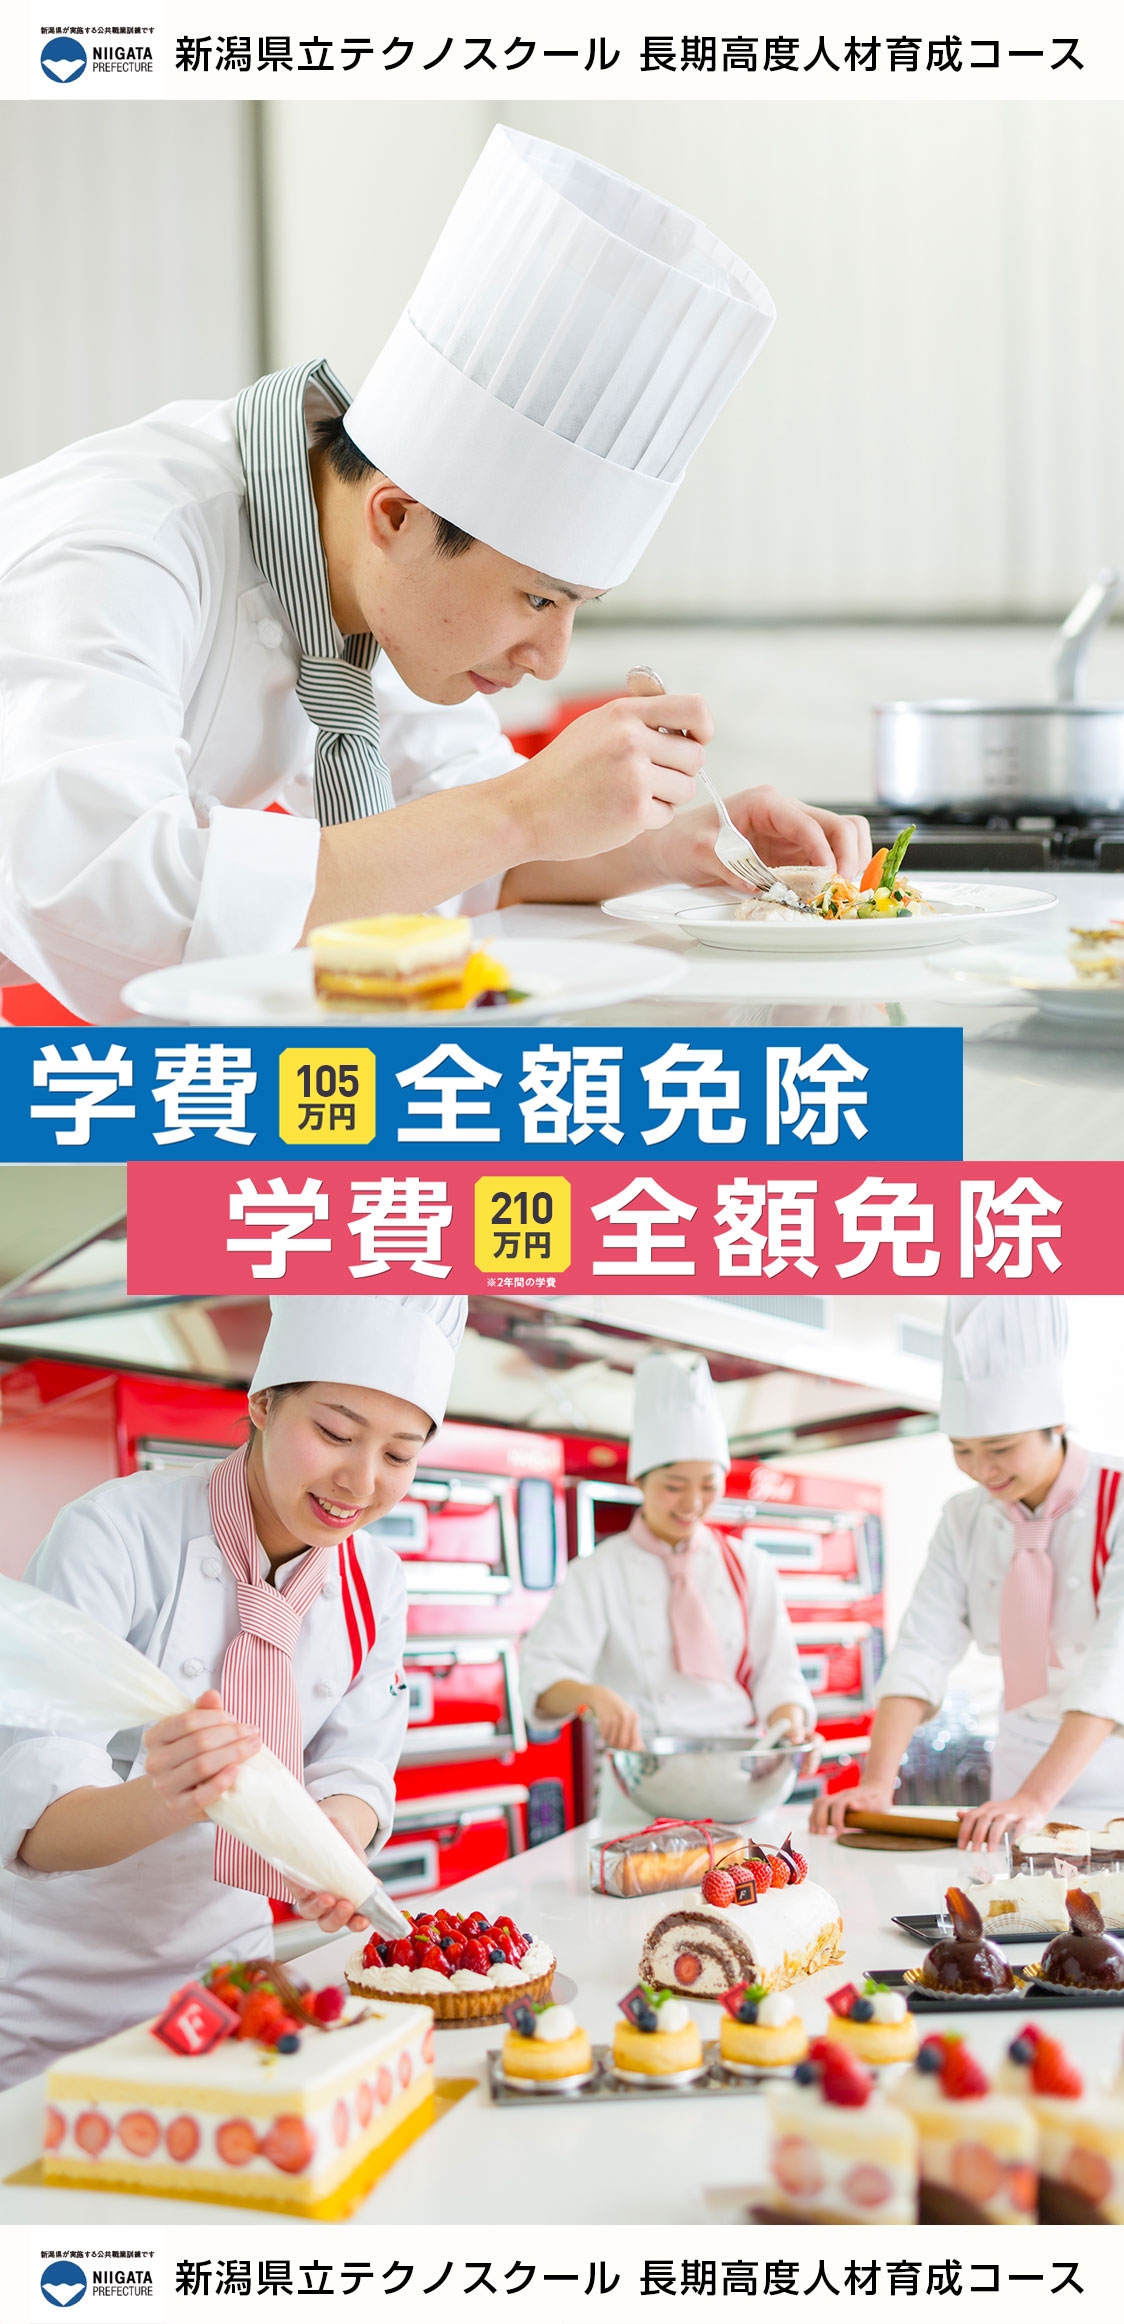 Food 国際調理製菓専門学校